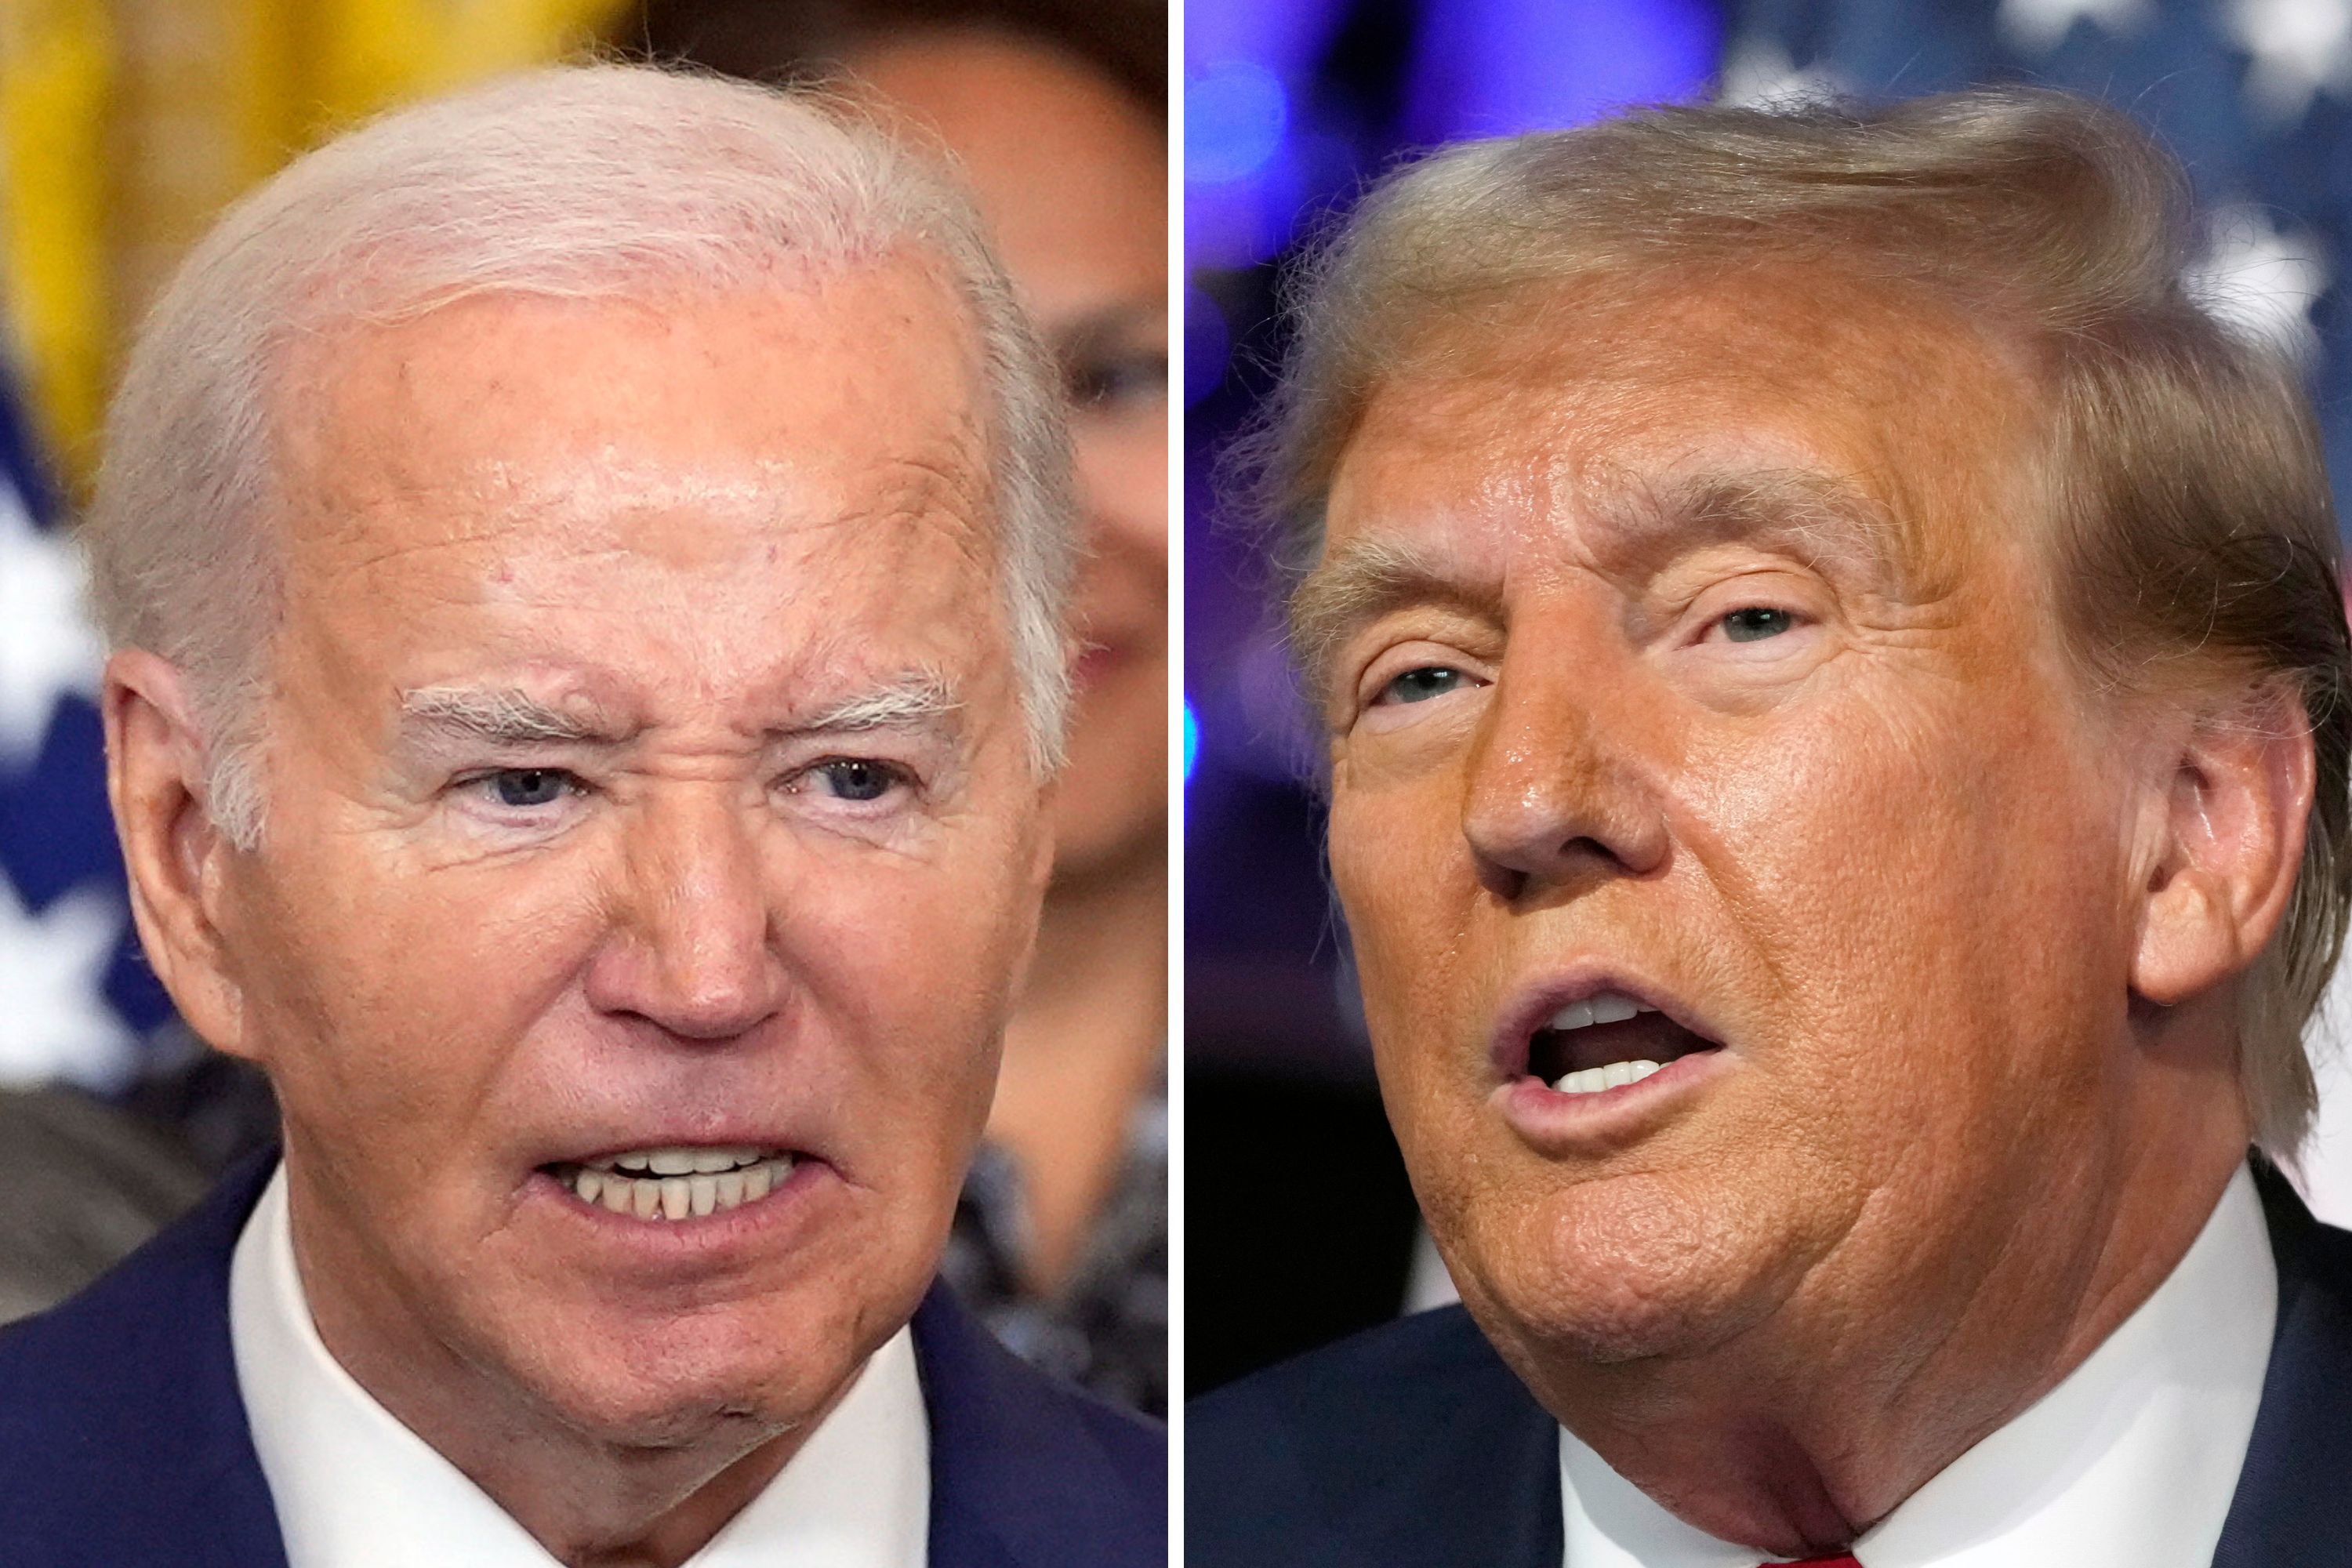 Donald Trump praises Joe Biden's debate skills